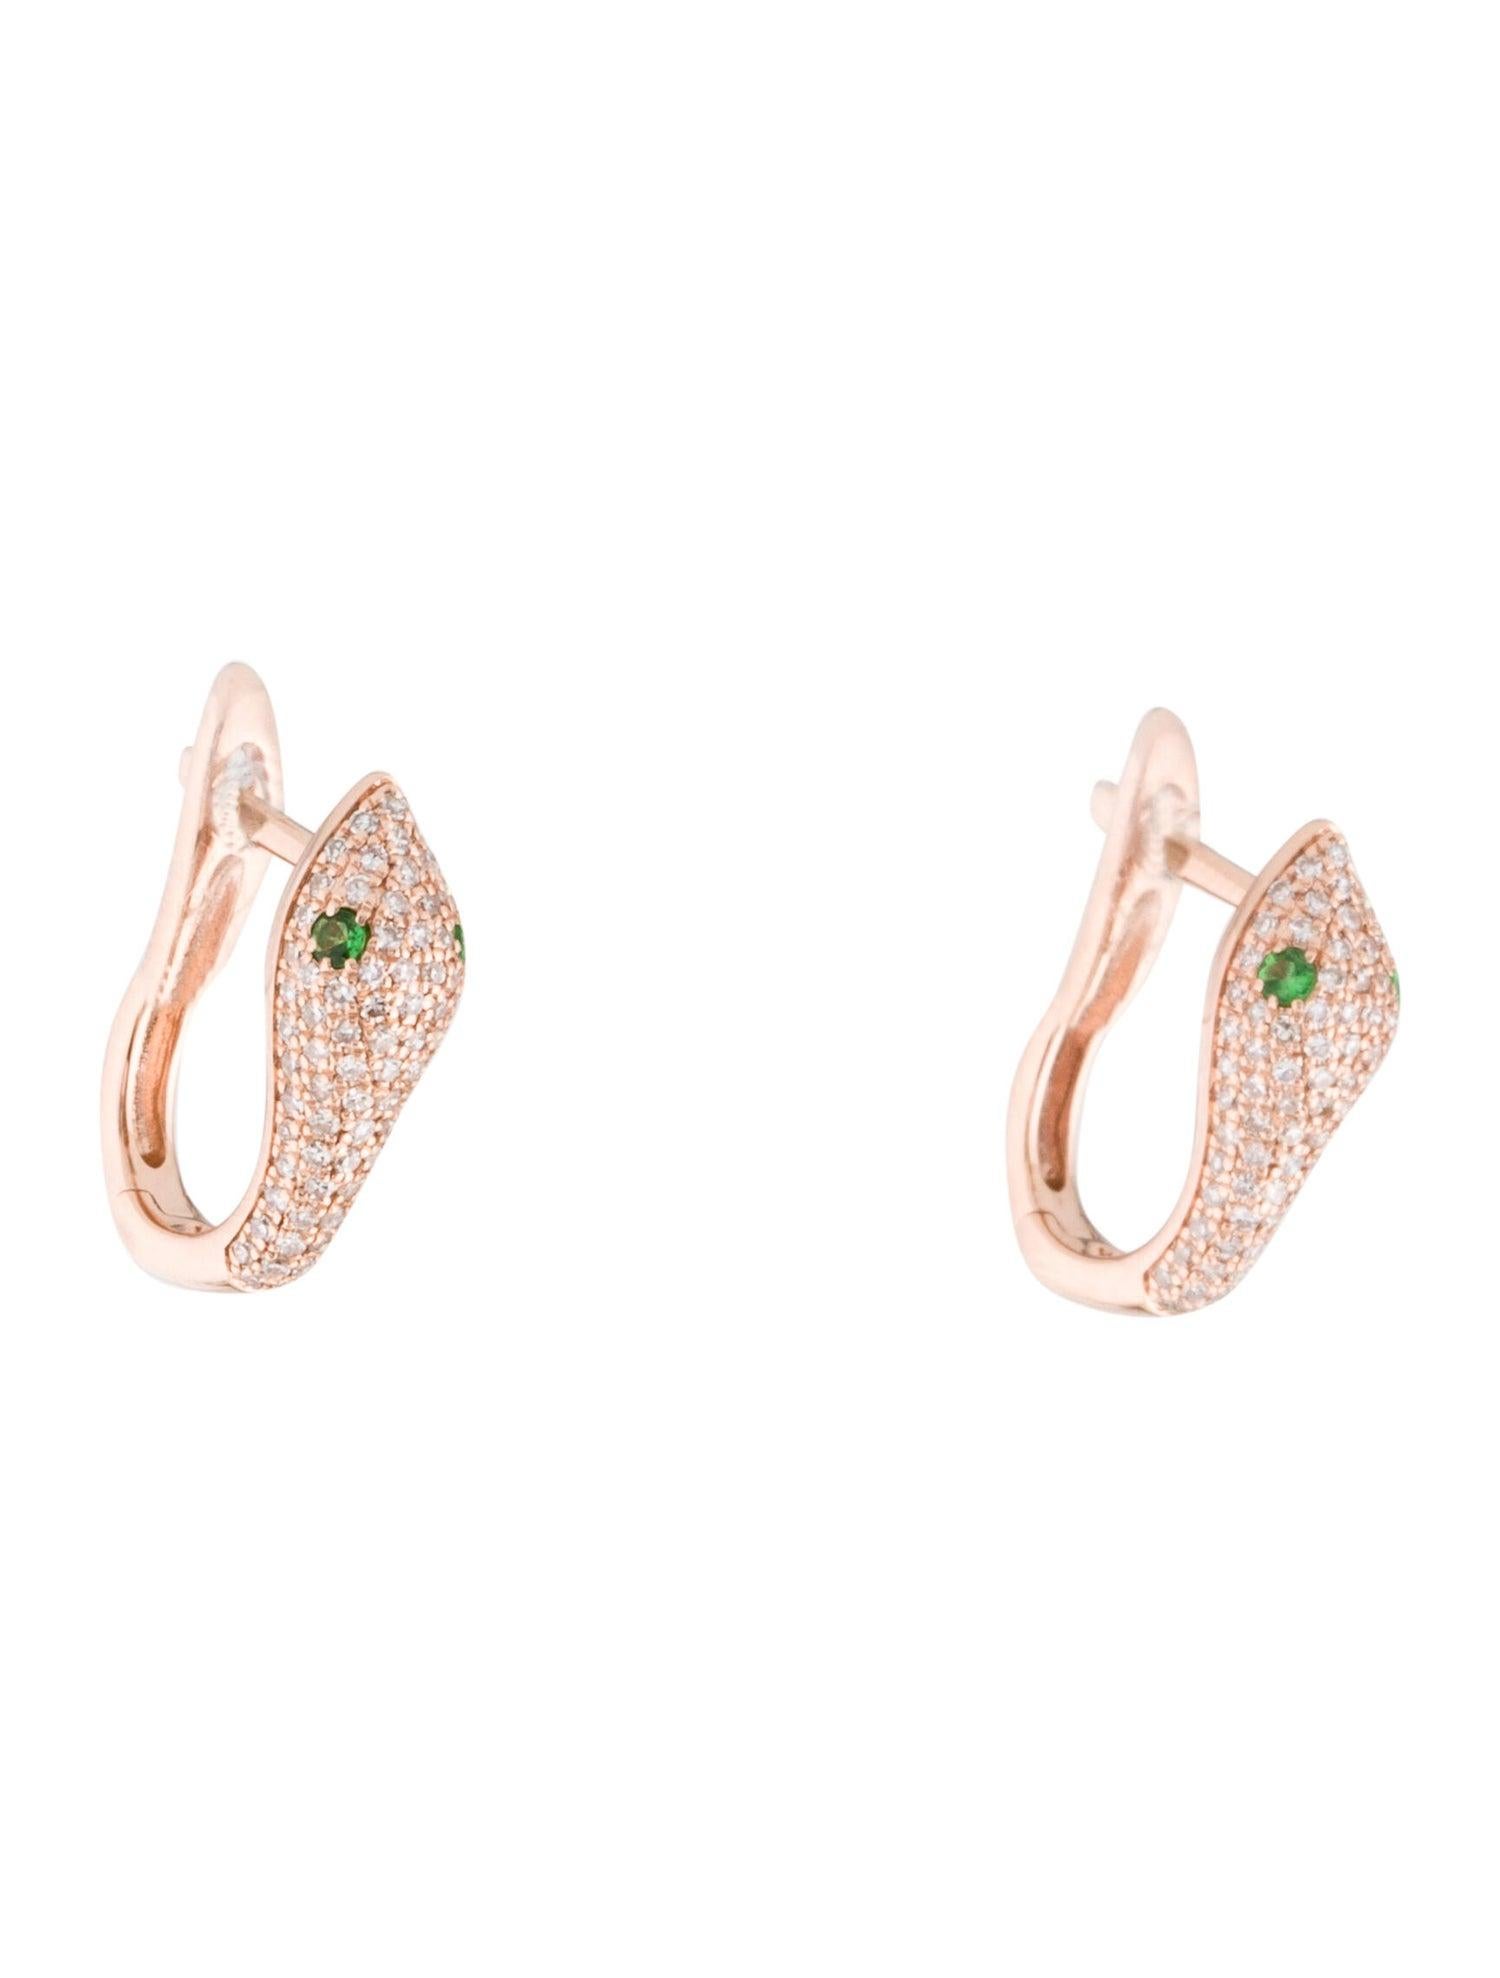 14K Rose Gold 0.46 Carat Diamond & Tsavorite Snake Earrings In New Condition For Sale In Great neck, NY